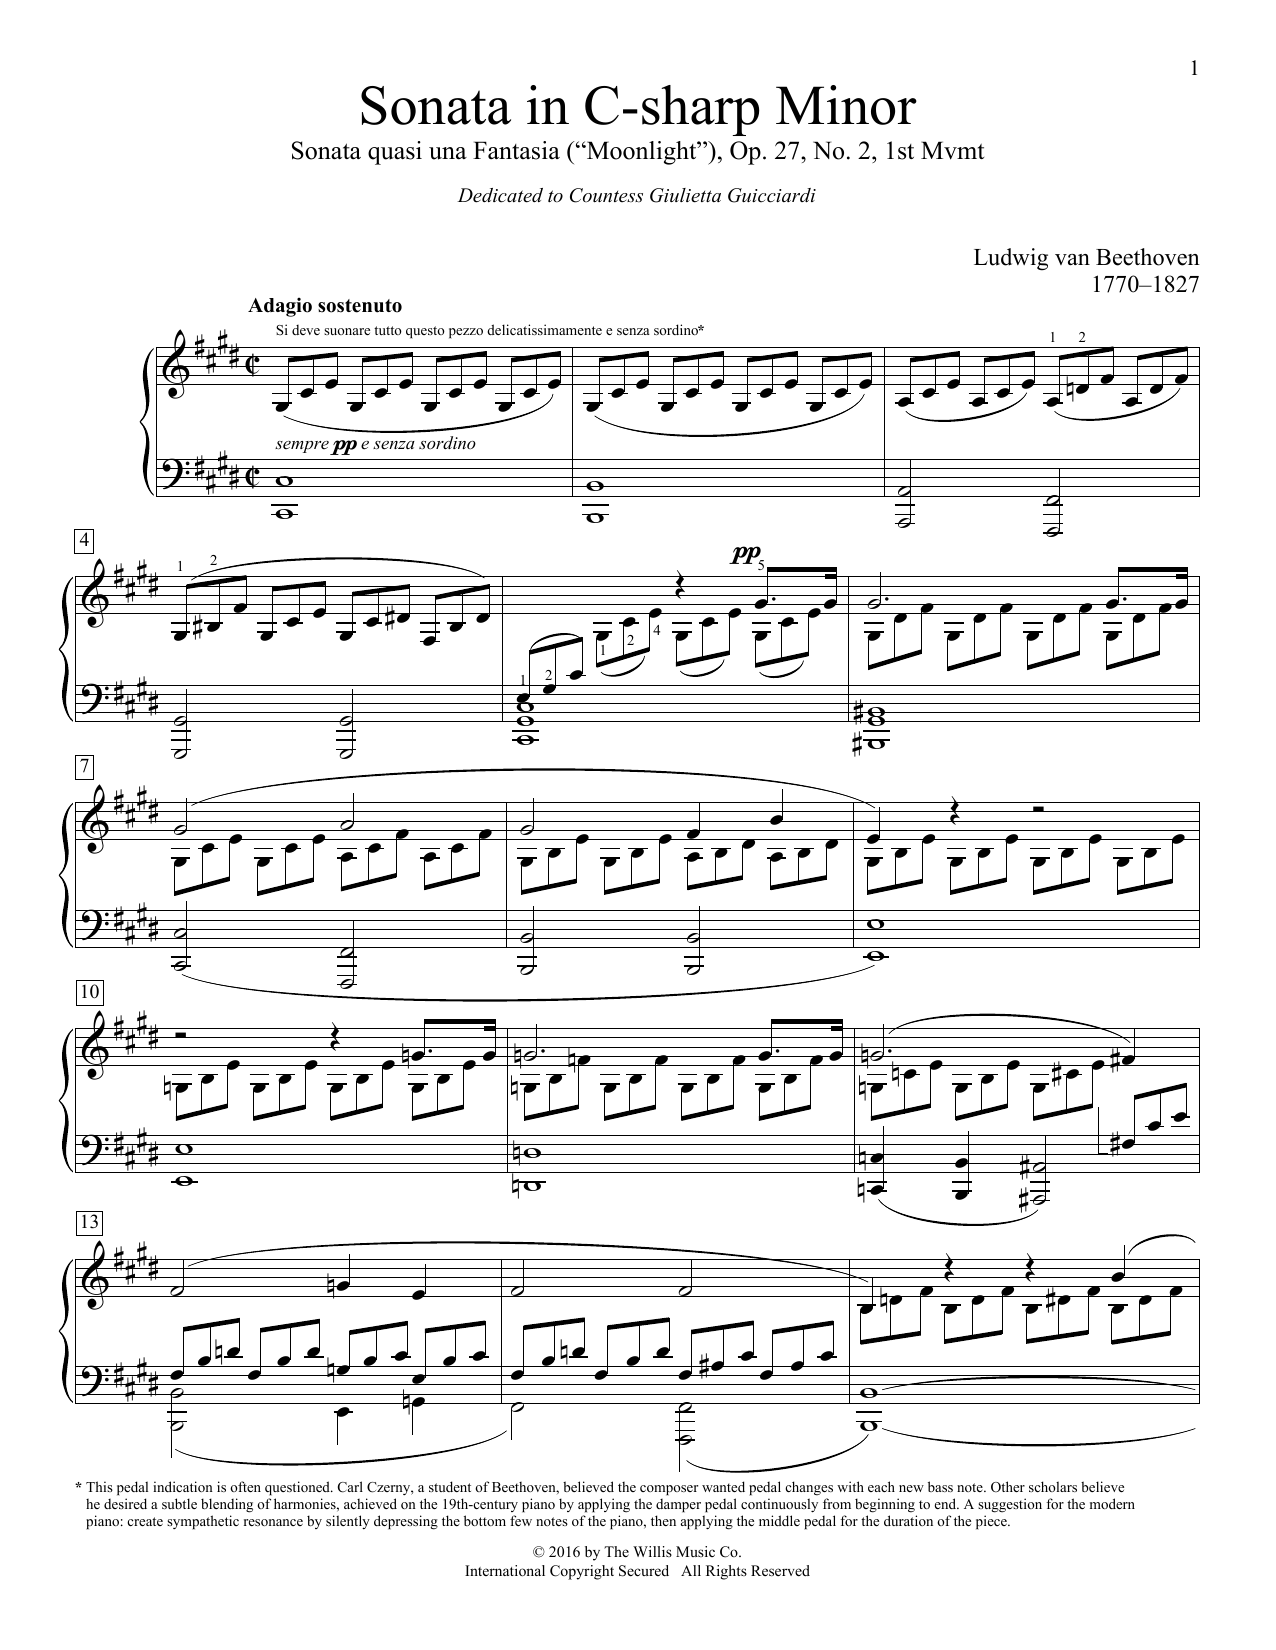 Ludwig van Beethoven Sonata In C-Sharp Minor, Sonata quasi una Fantasia (